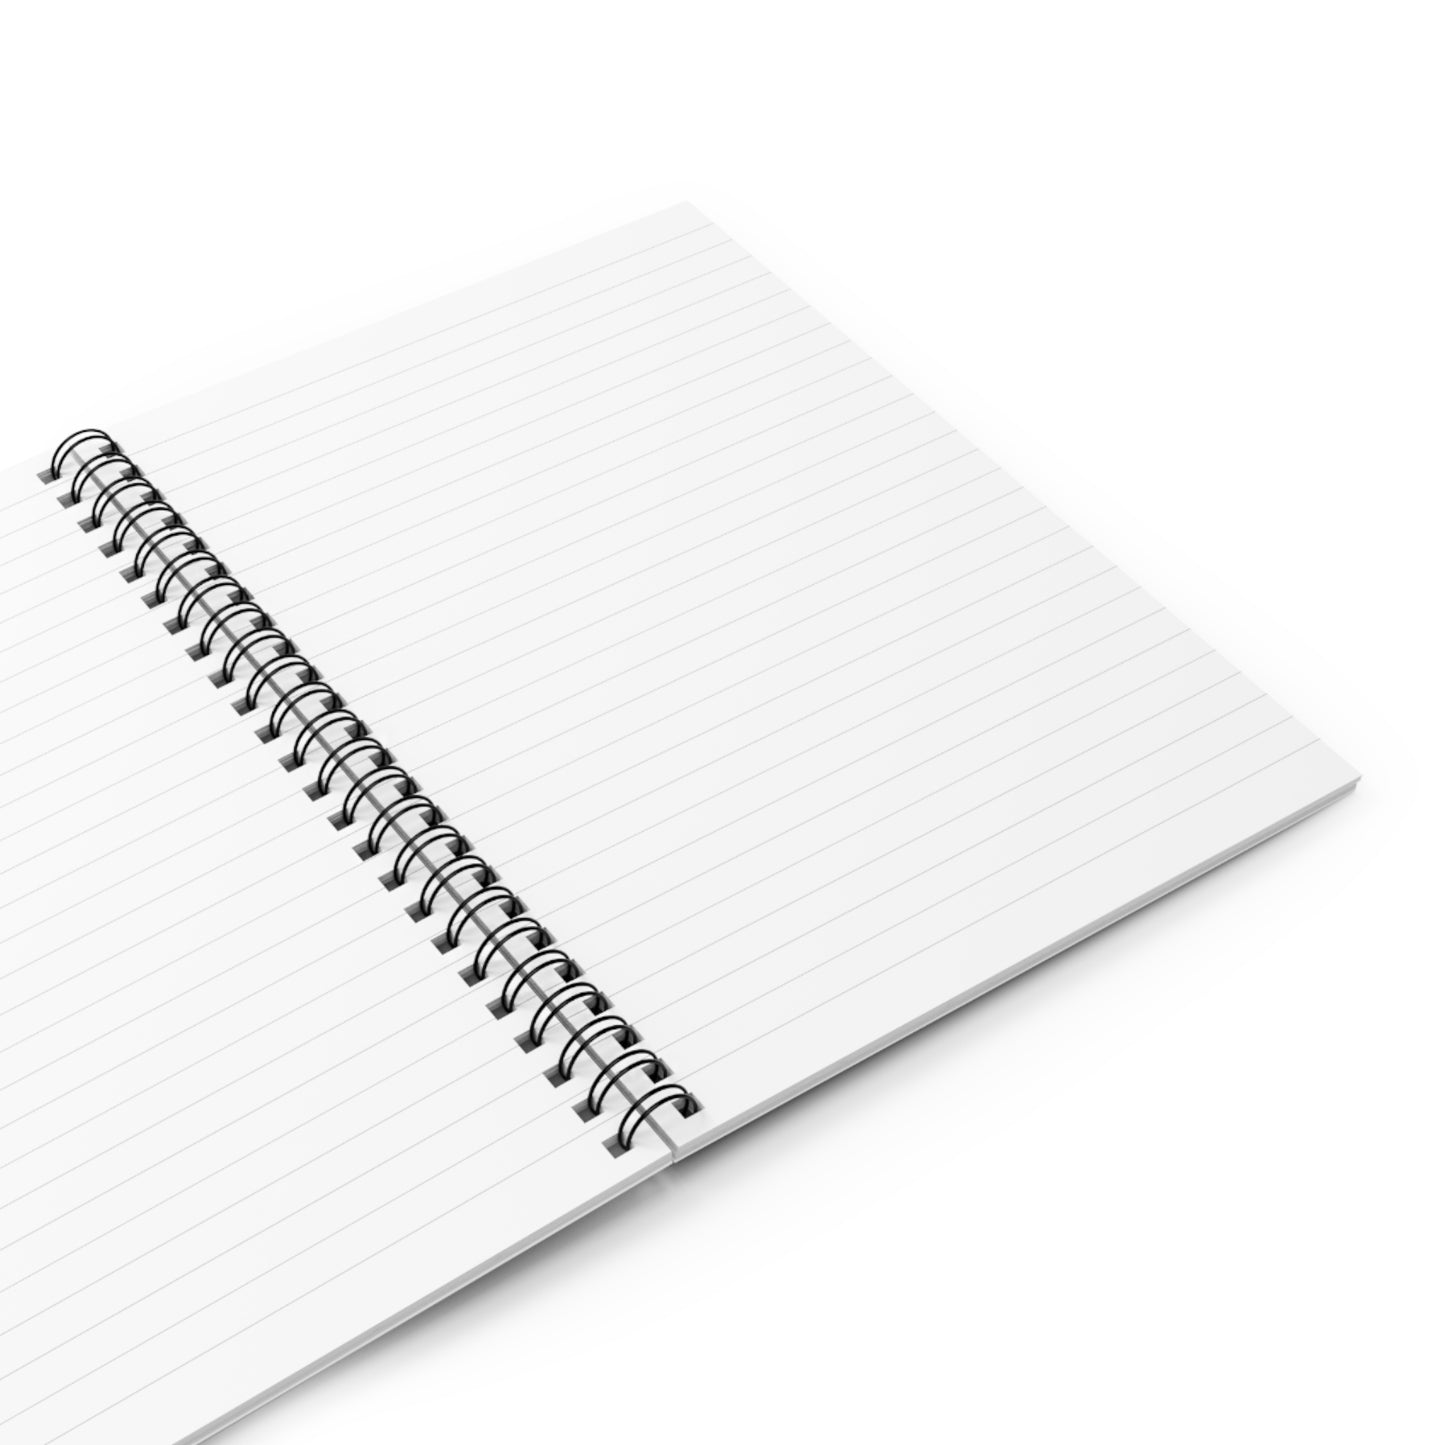 Green Notebook - Blank Ruled Line